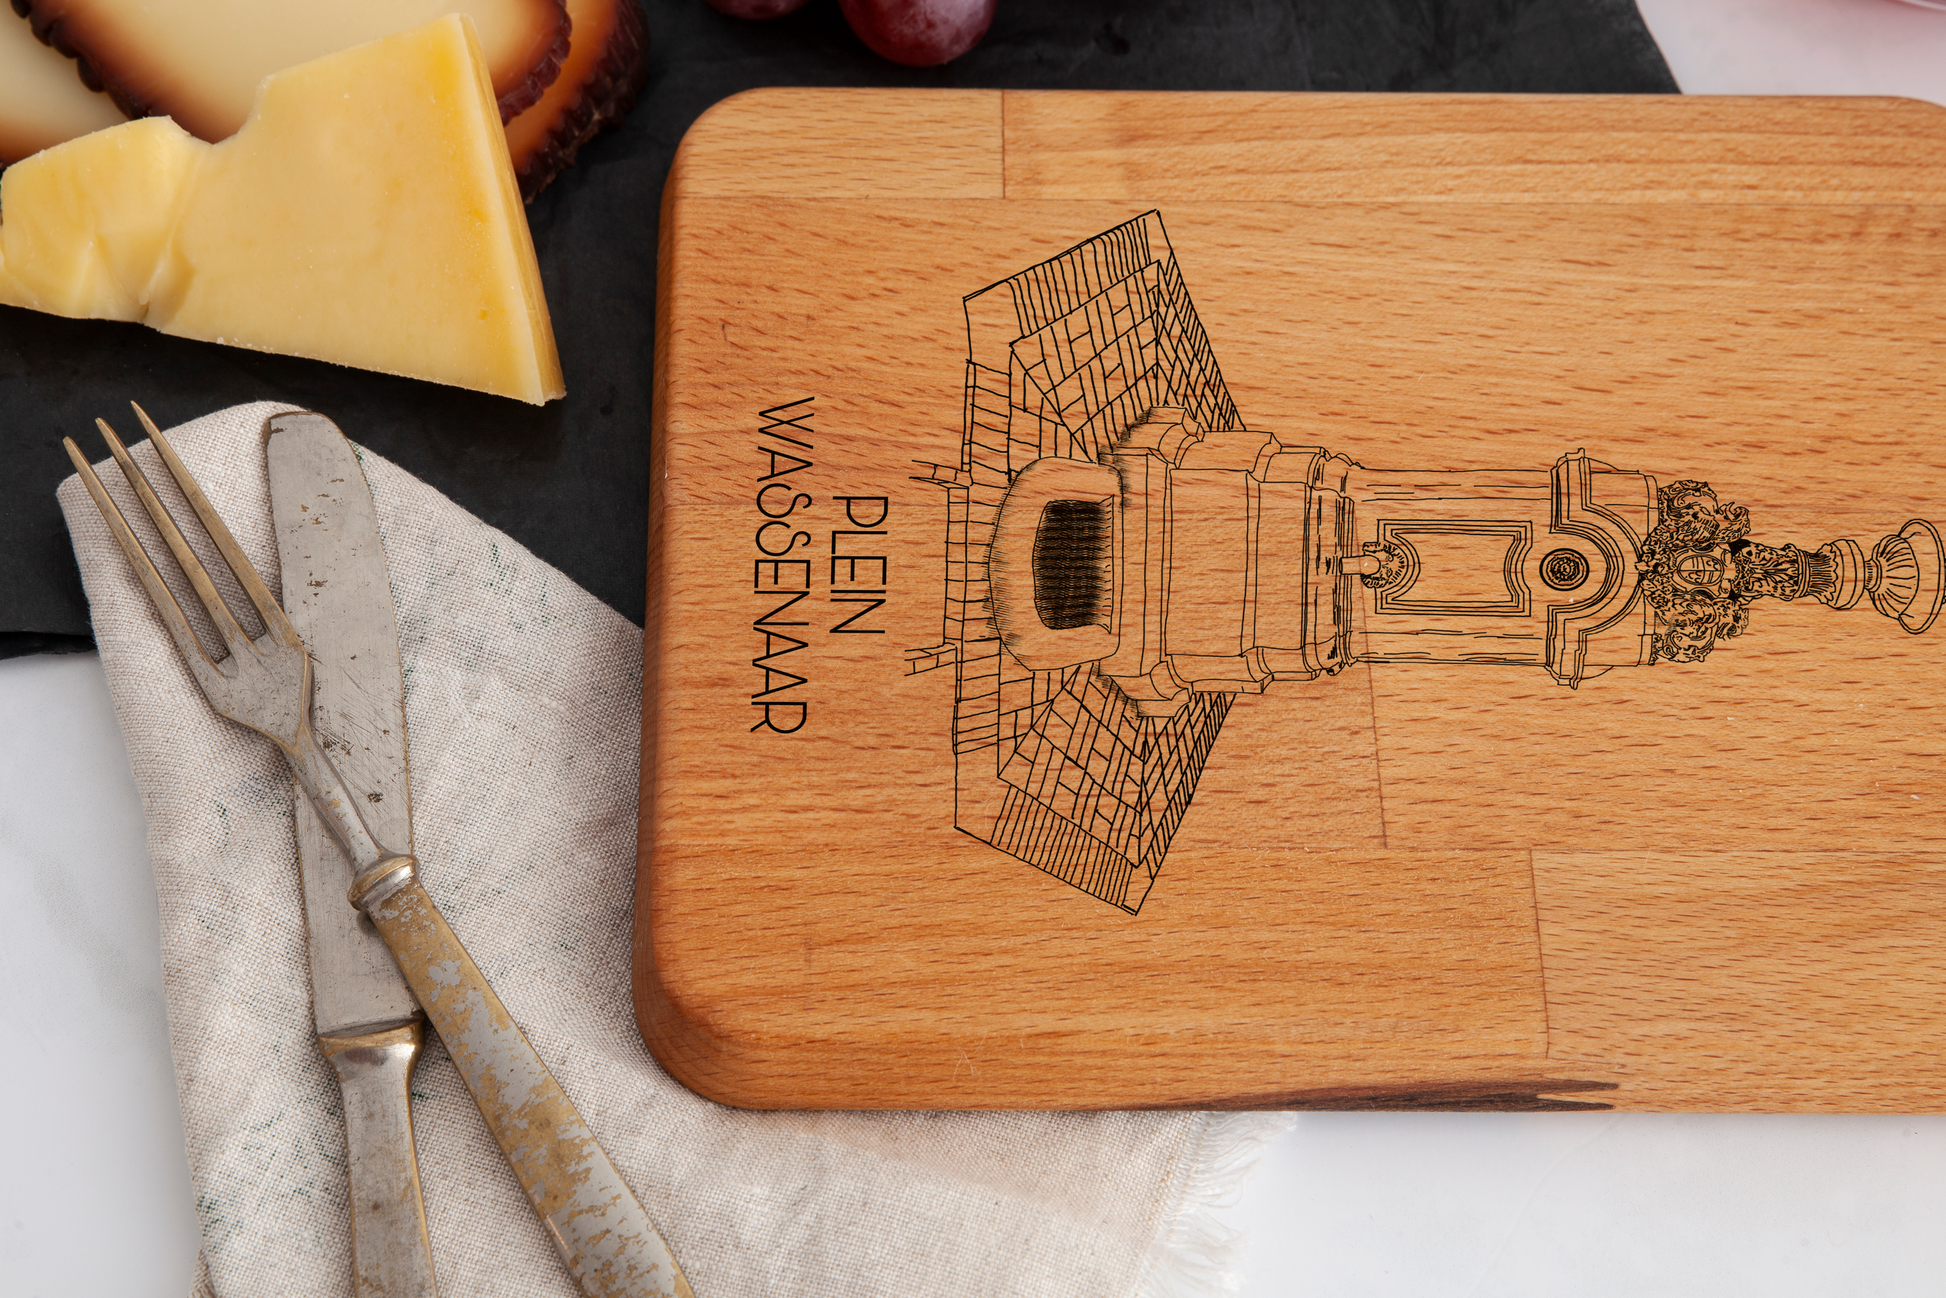 Wassenaar, Plein, cheese board, wood grain